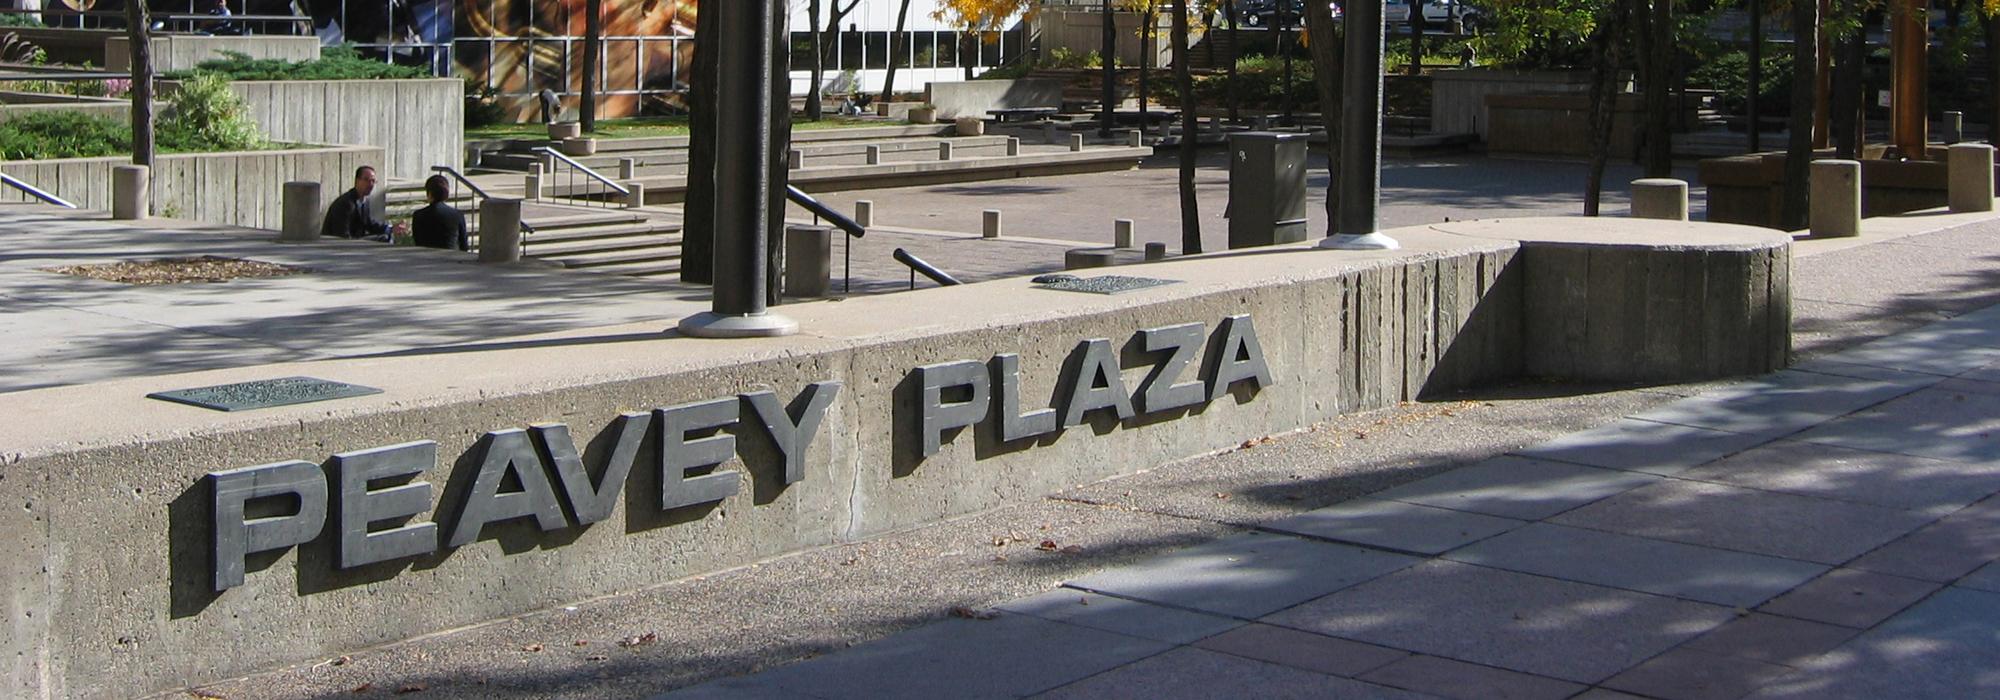 Peavey Plaza, Minneapolis, MN